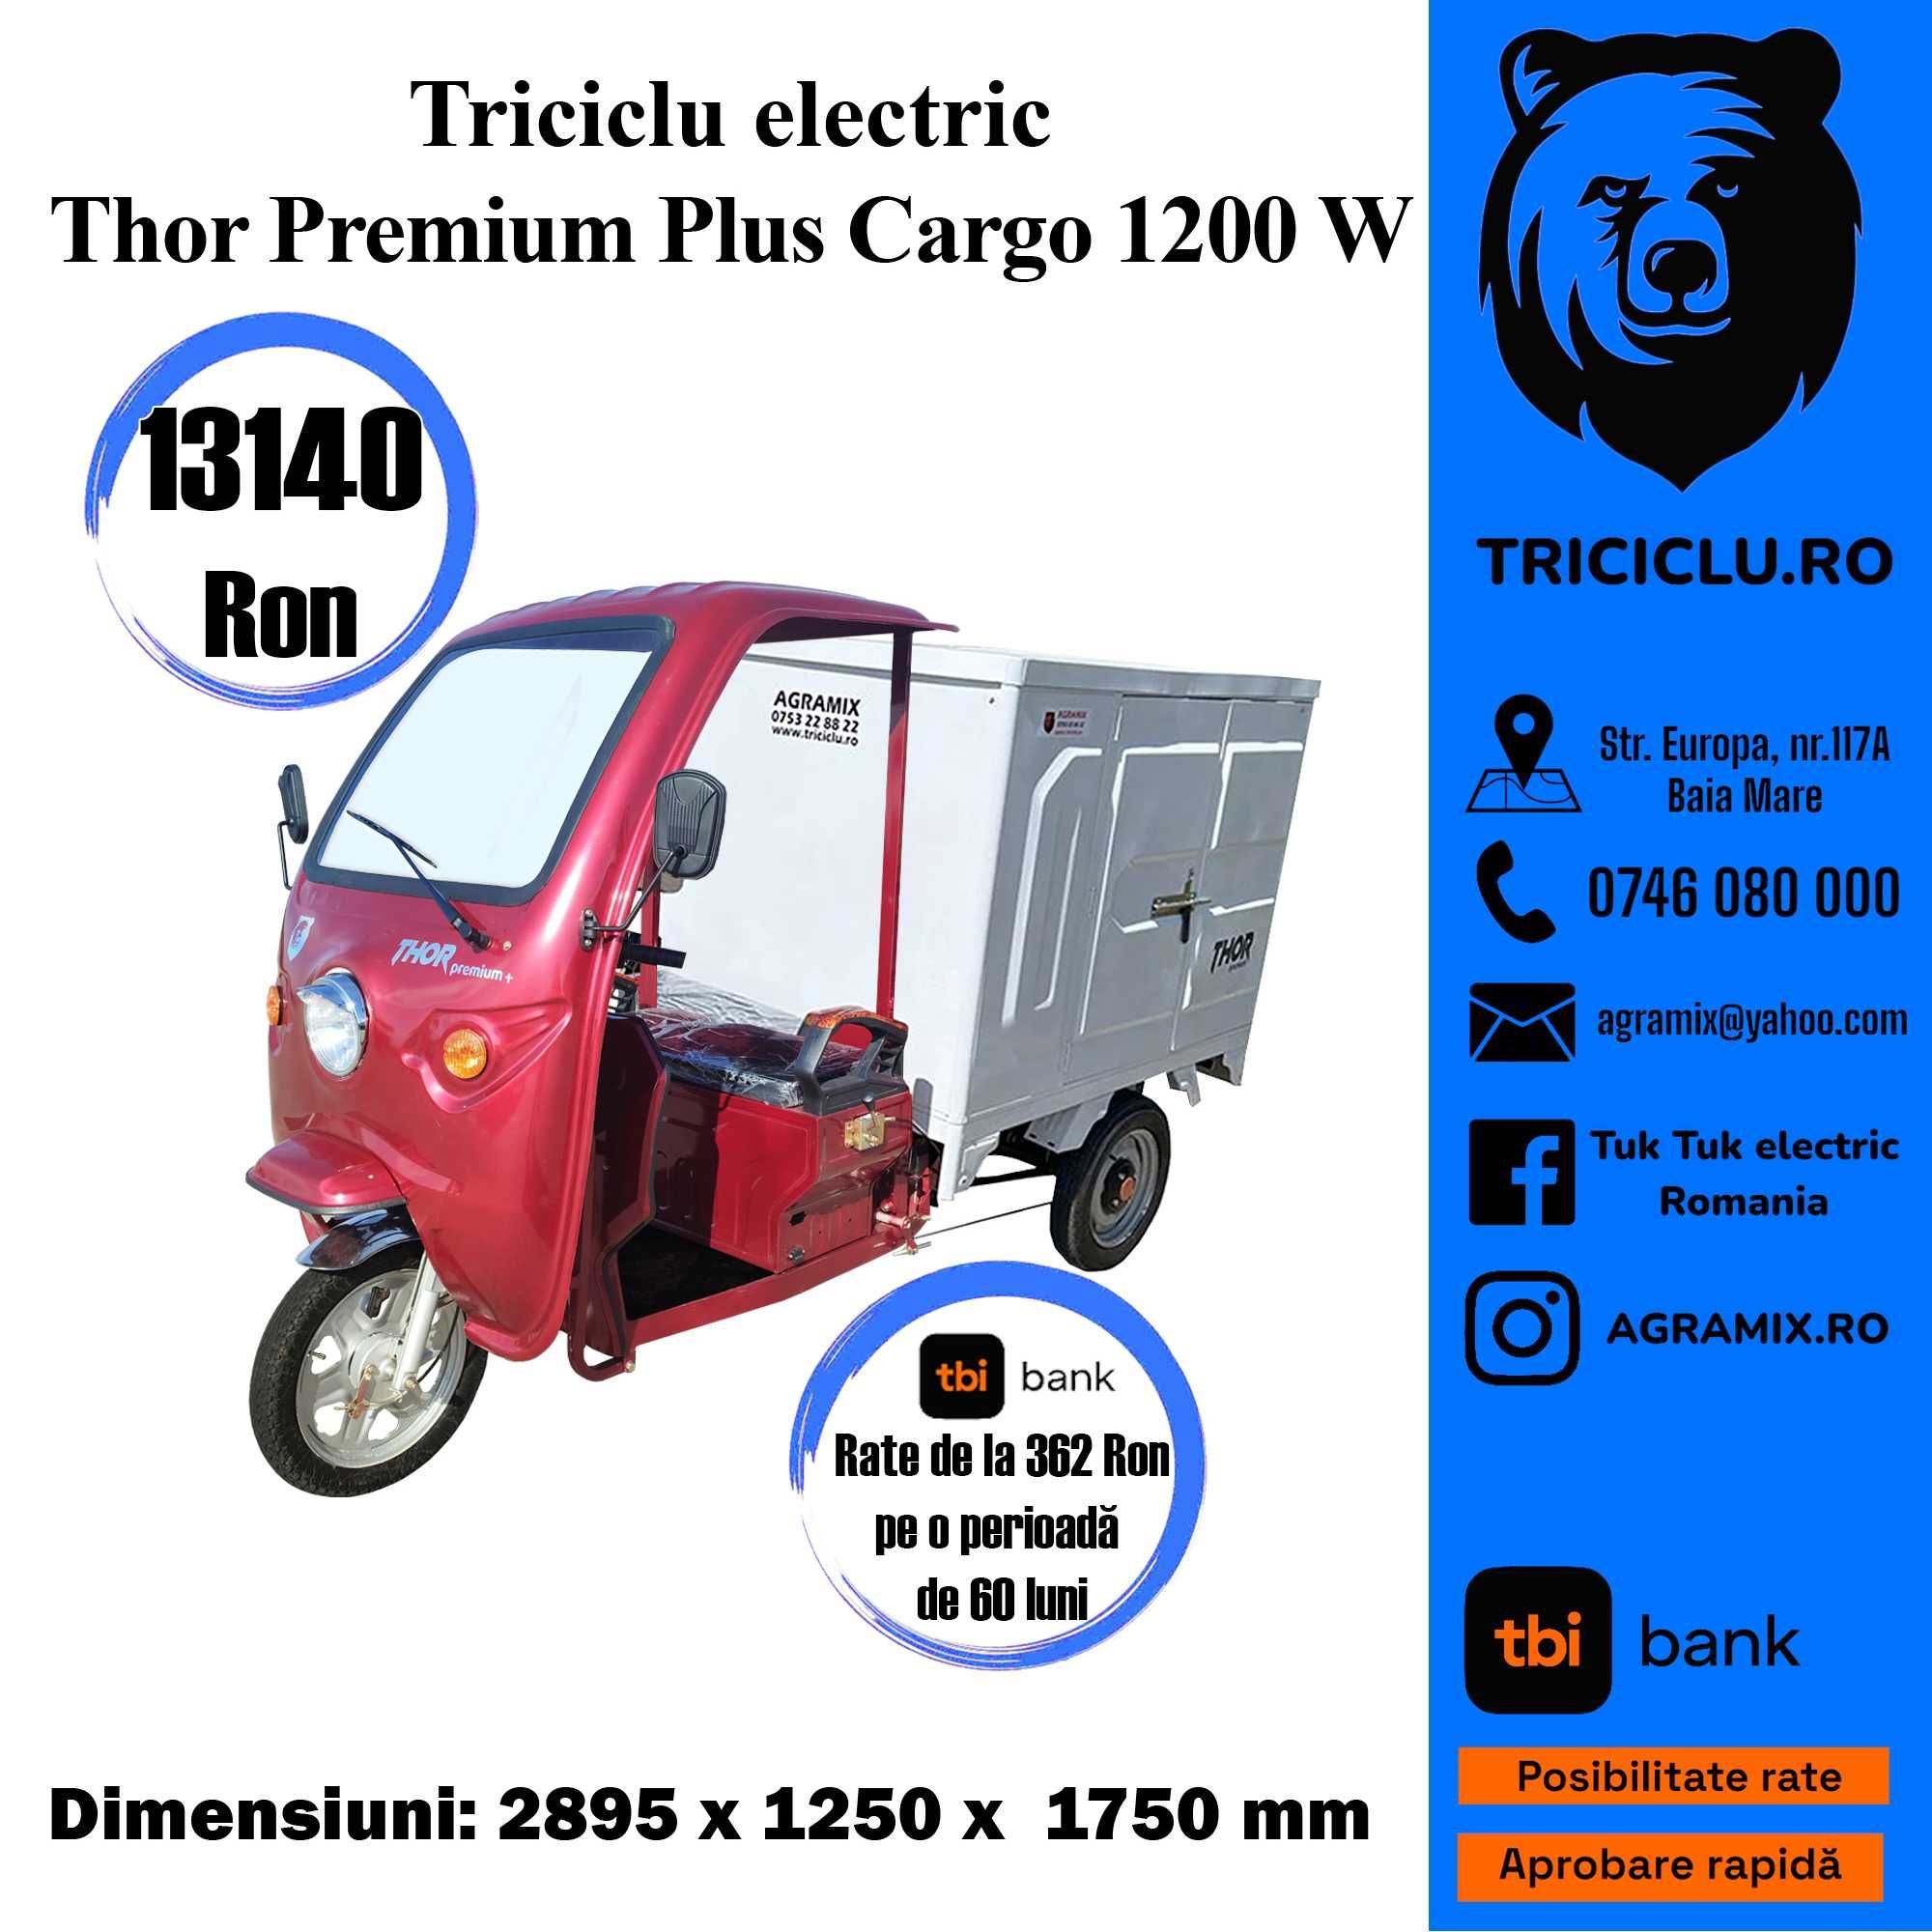 Triciclu NOU electric Thor Premium Plus 1200W Agramix